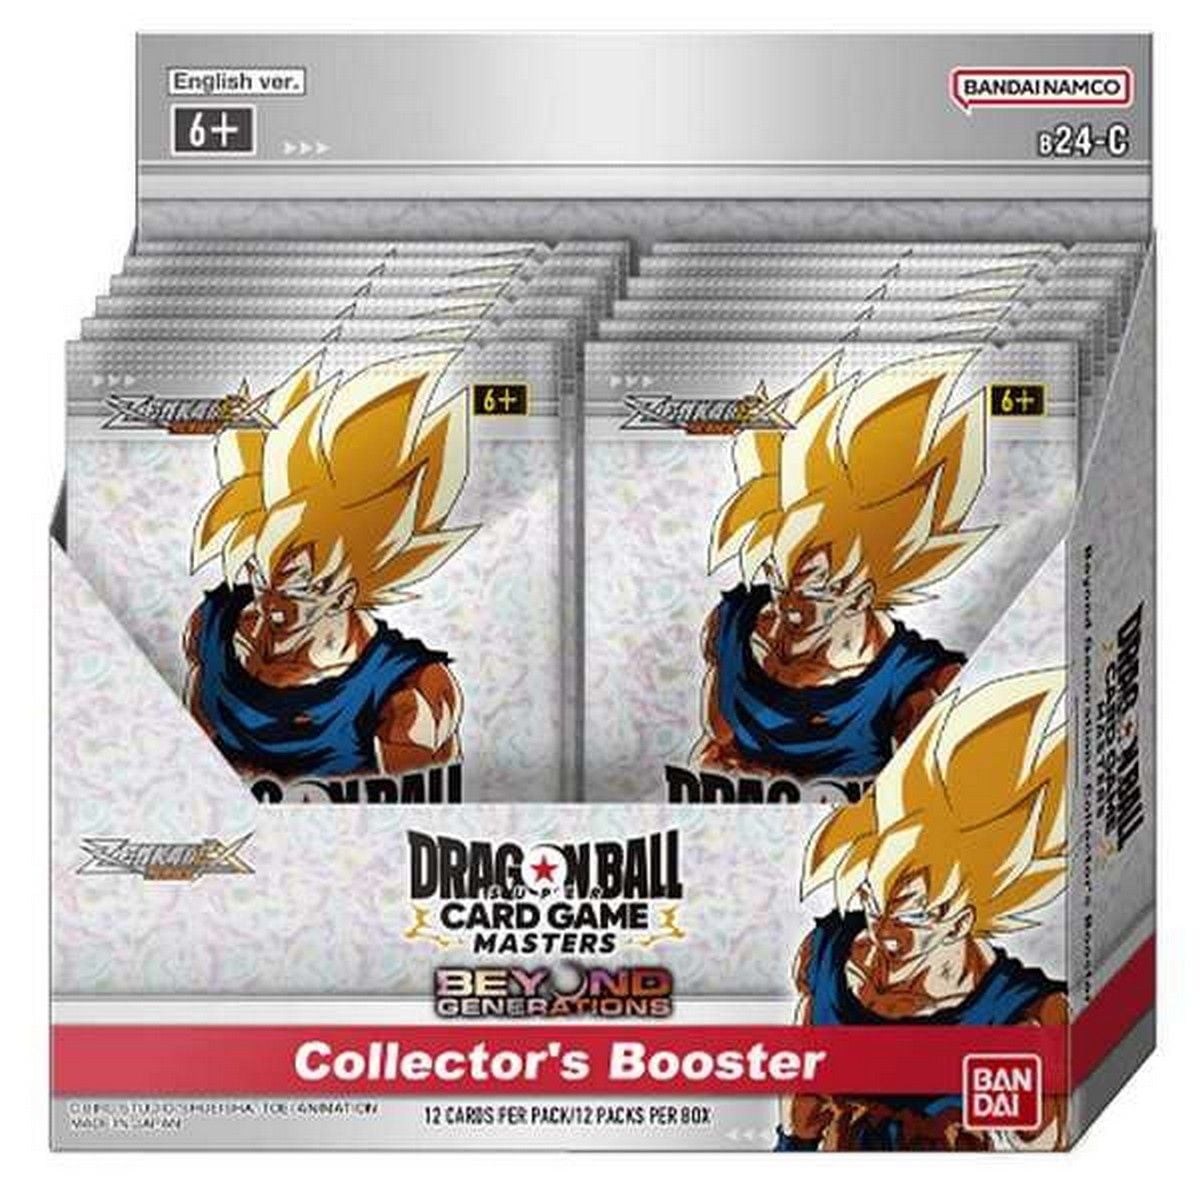 Dragon Ball Super CG: Zenkai Series Set EX 07 - Collector's Booster Box (DBS-B24-C)